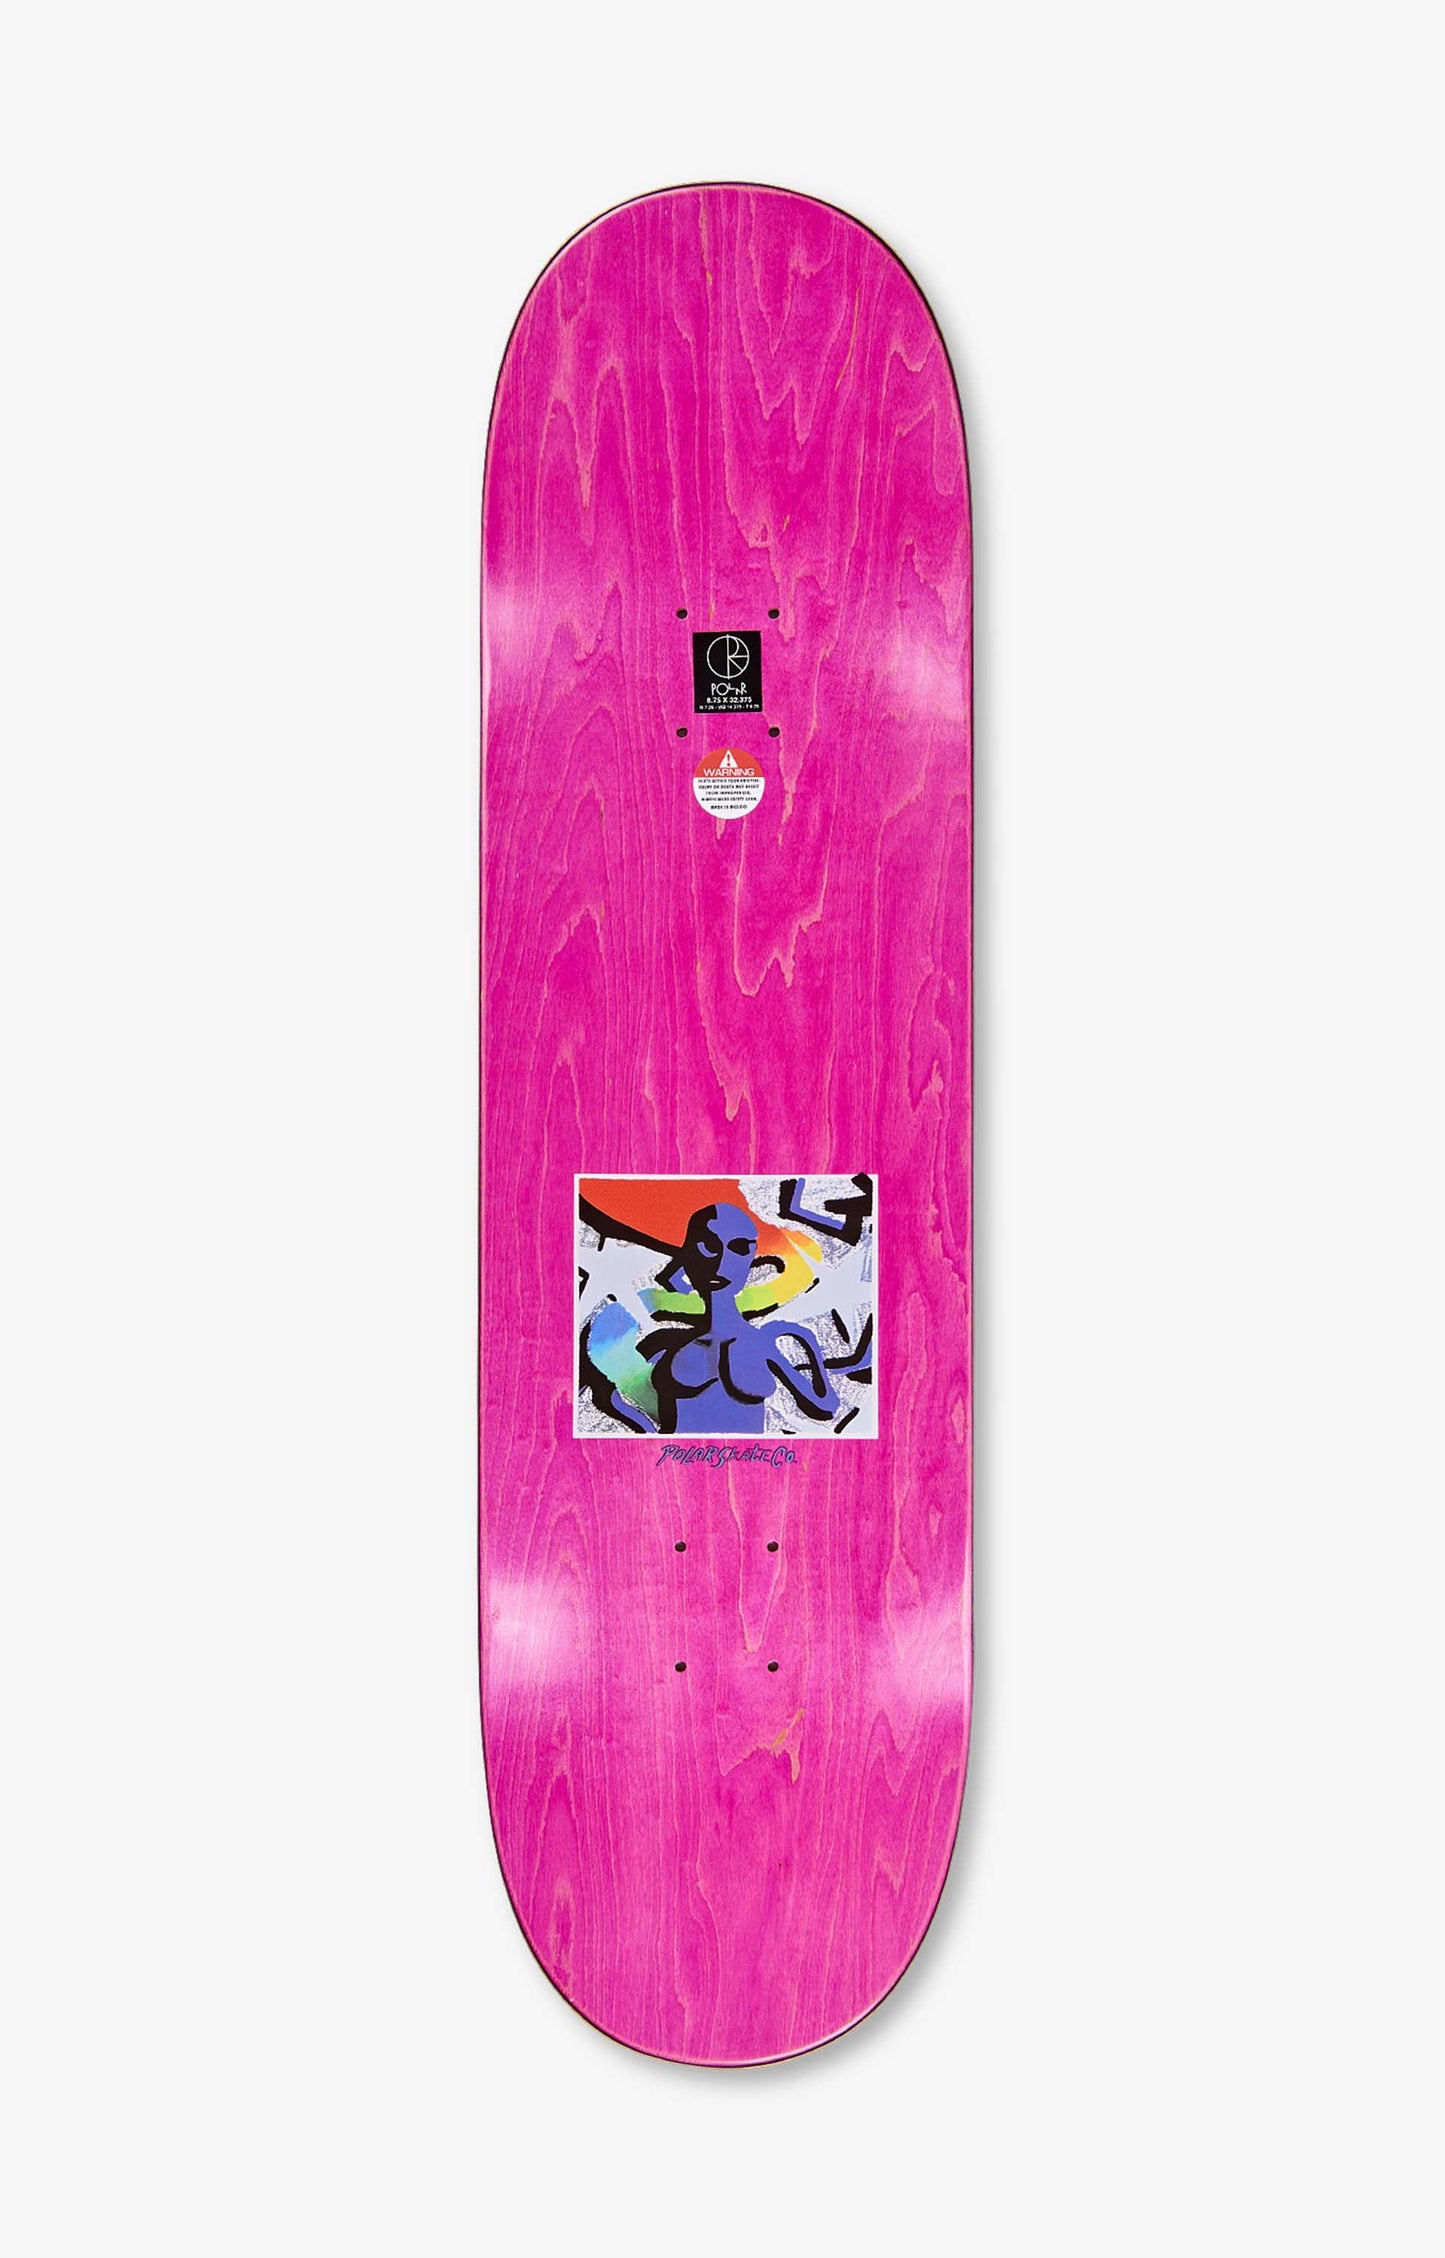 Polar Skate Co Shin Sanbongi Queen Skateboard Deck, Pink/White